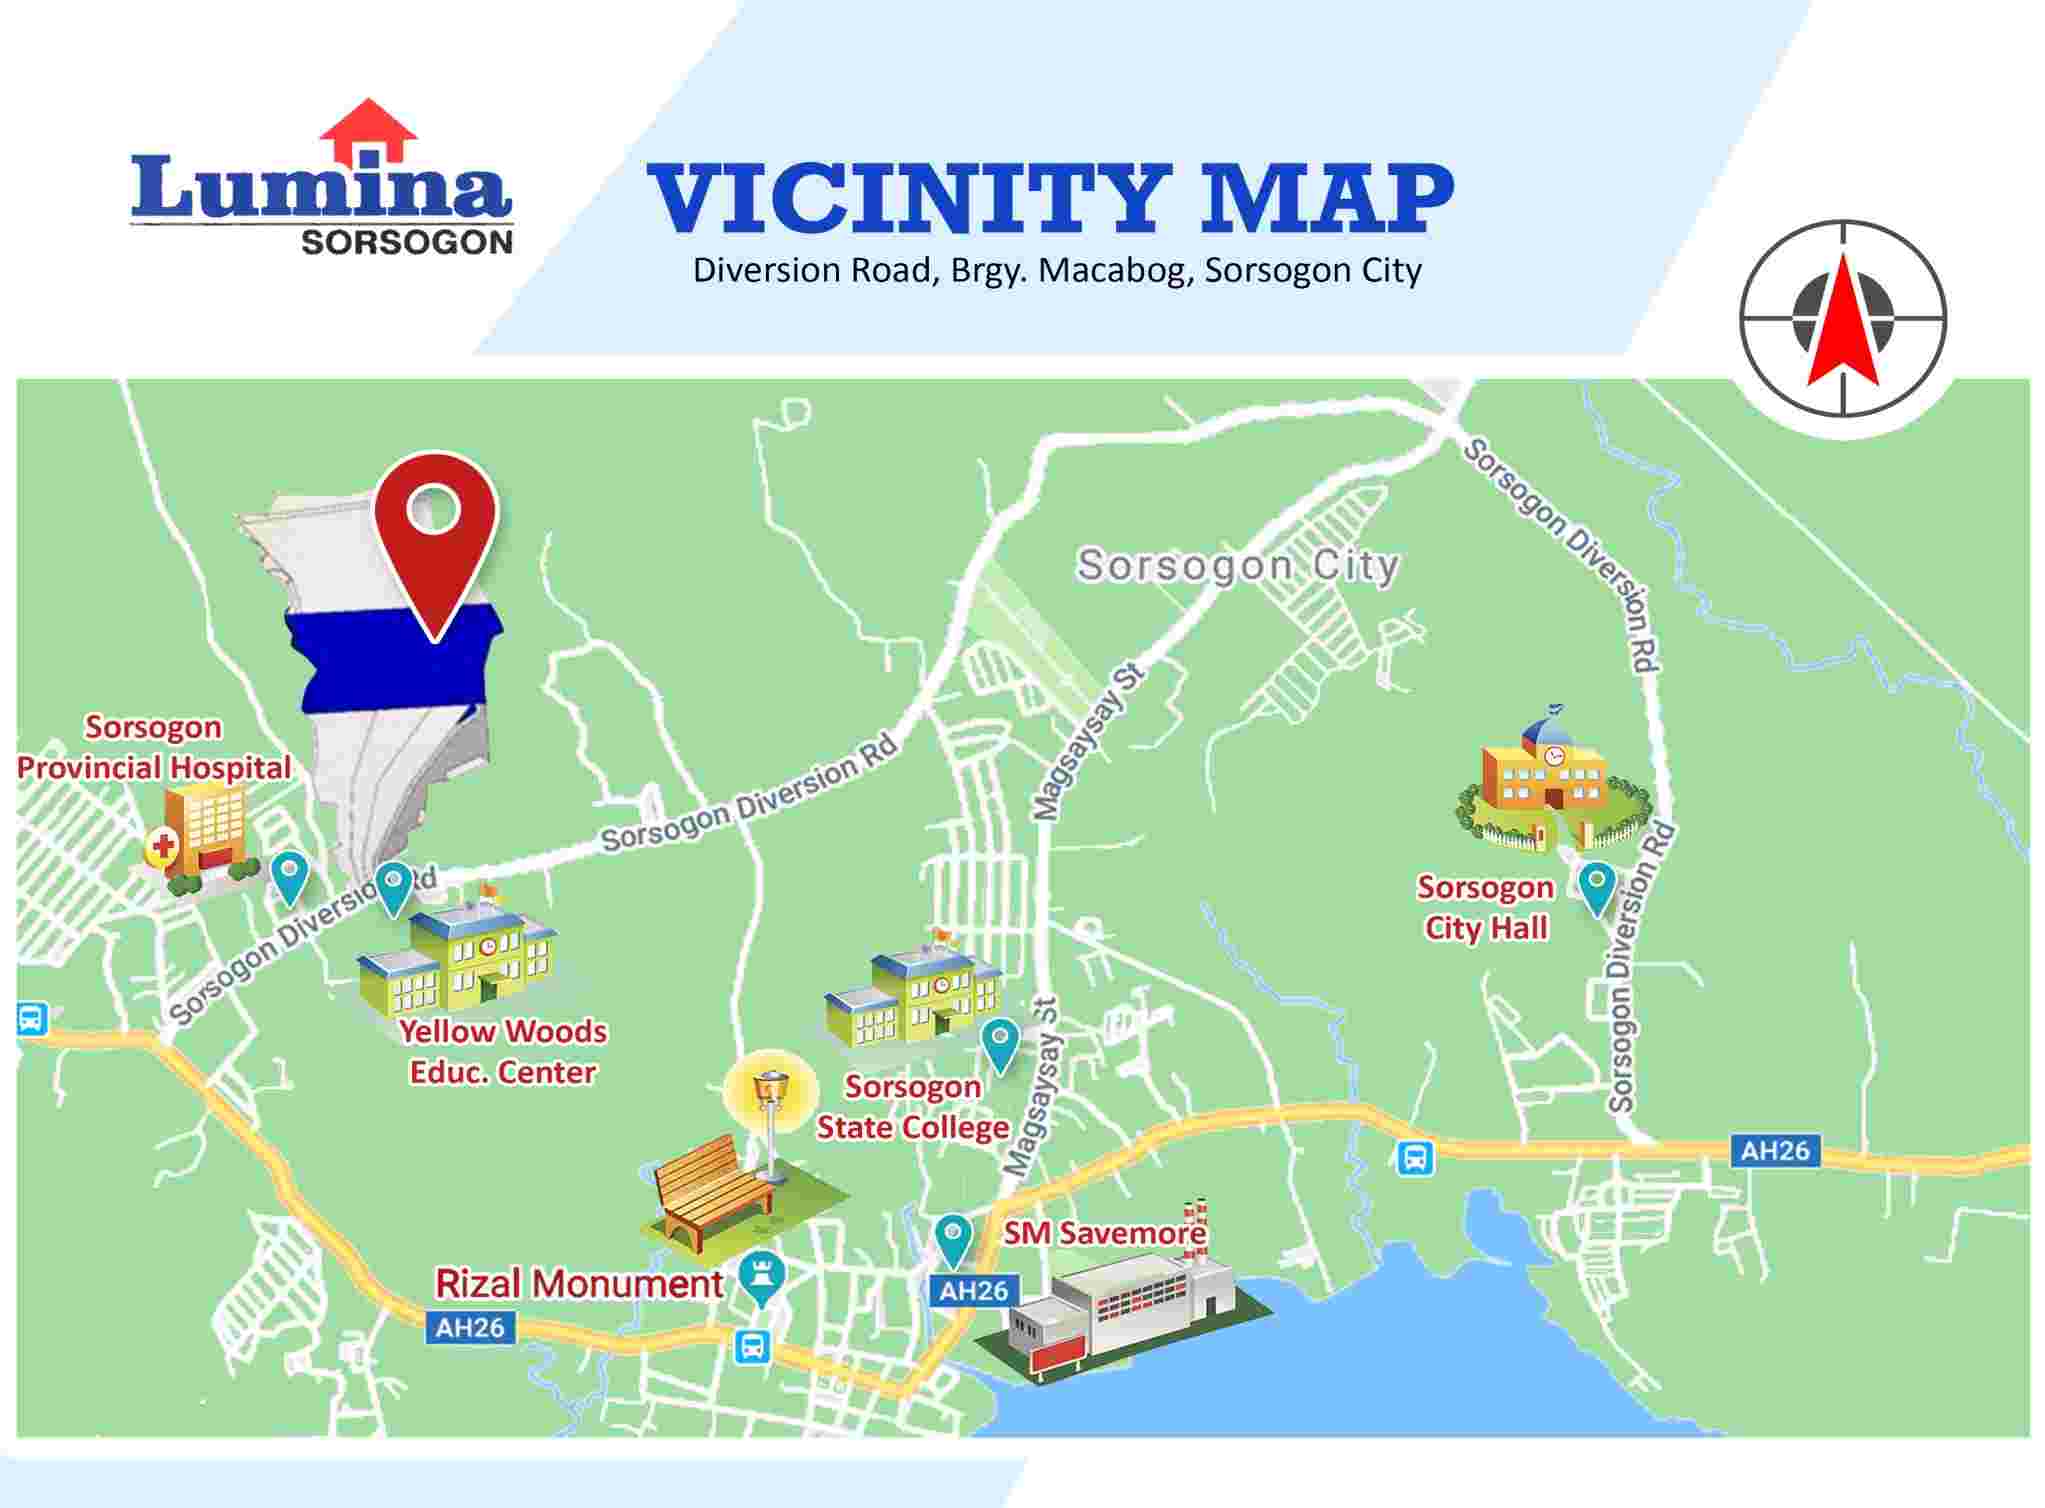 Vicinity-Map--Sorsogon-1637563334.jpeg